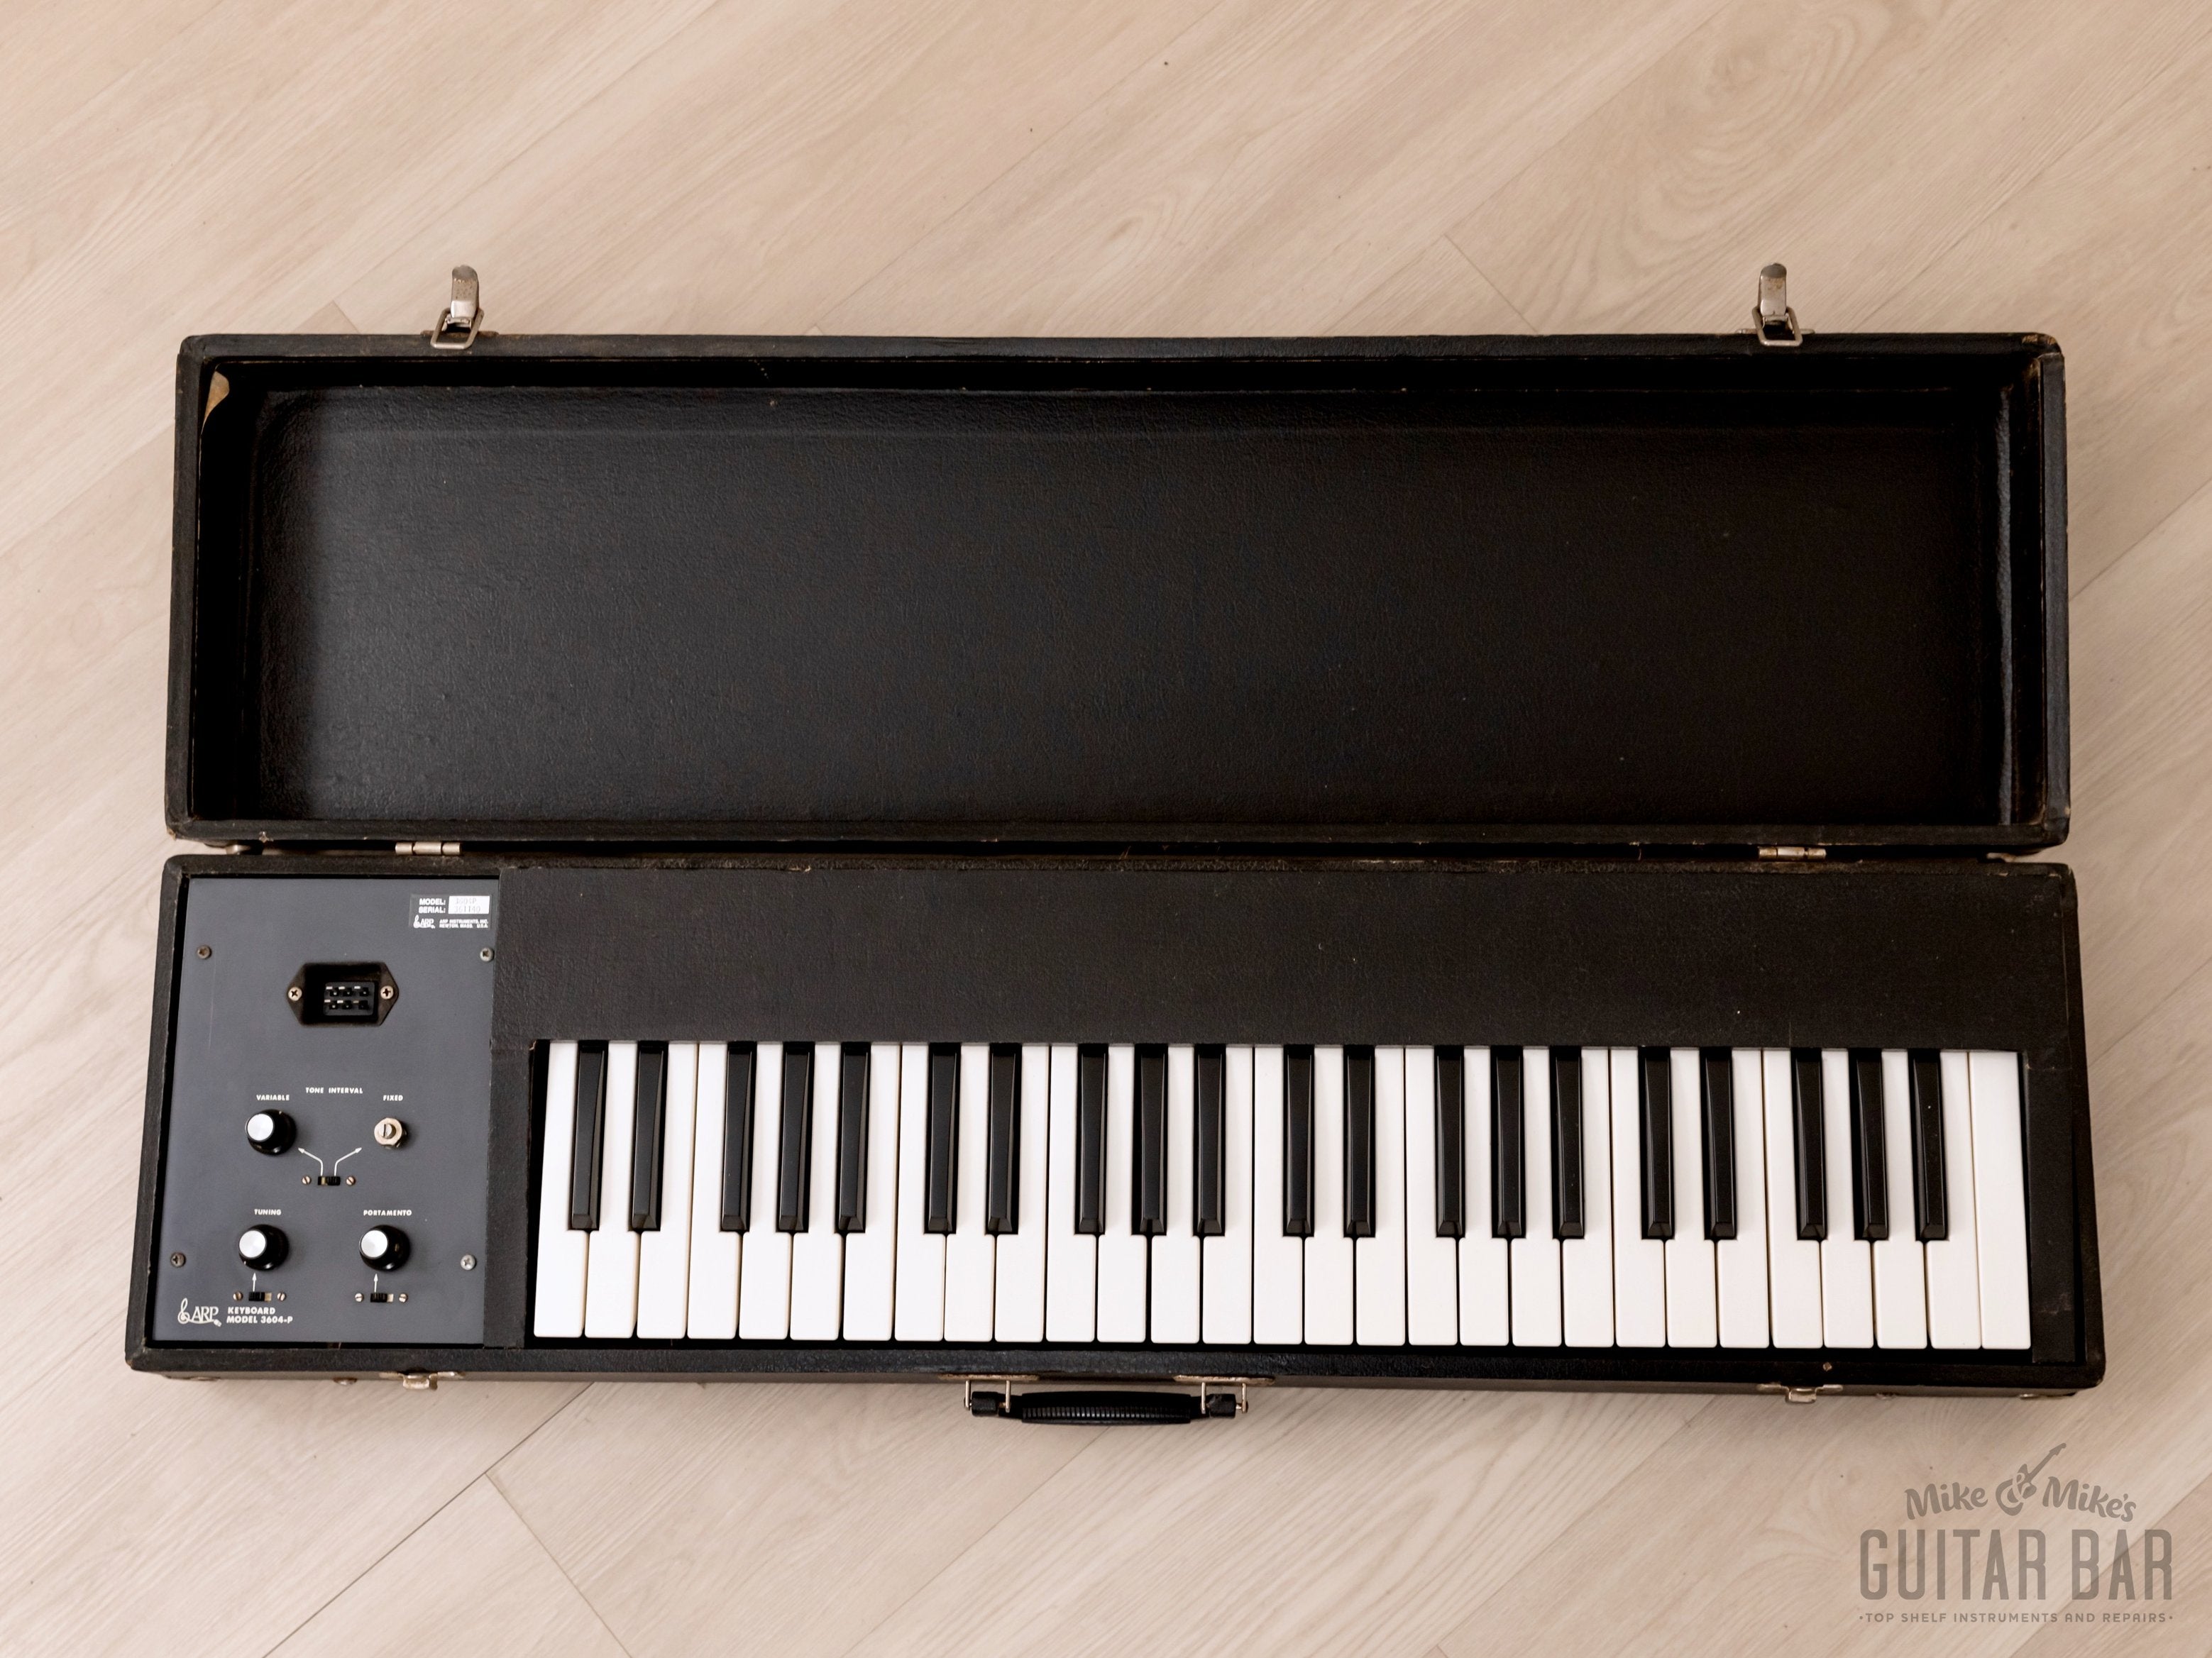 1975 ARP 2600 model 2601 V1.0 Vintage Analog Synthesizer w/ 3604-P Keyboard Controller, Serviced